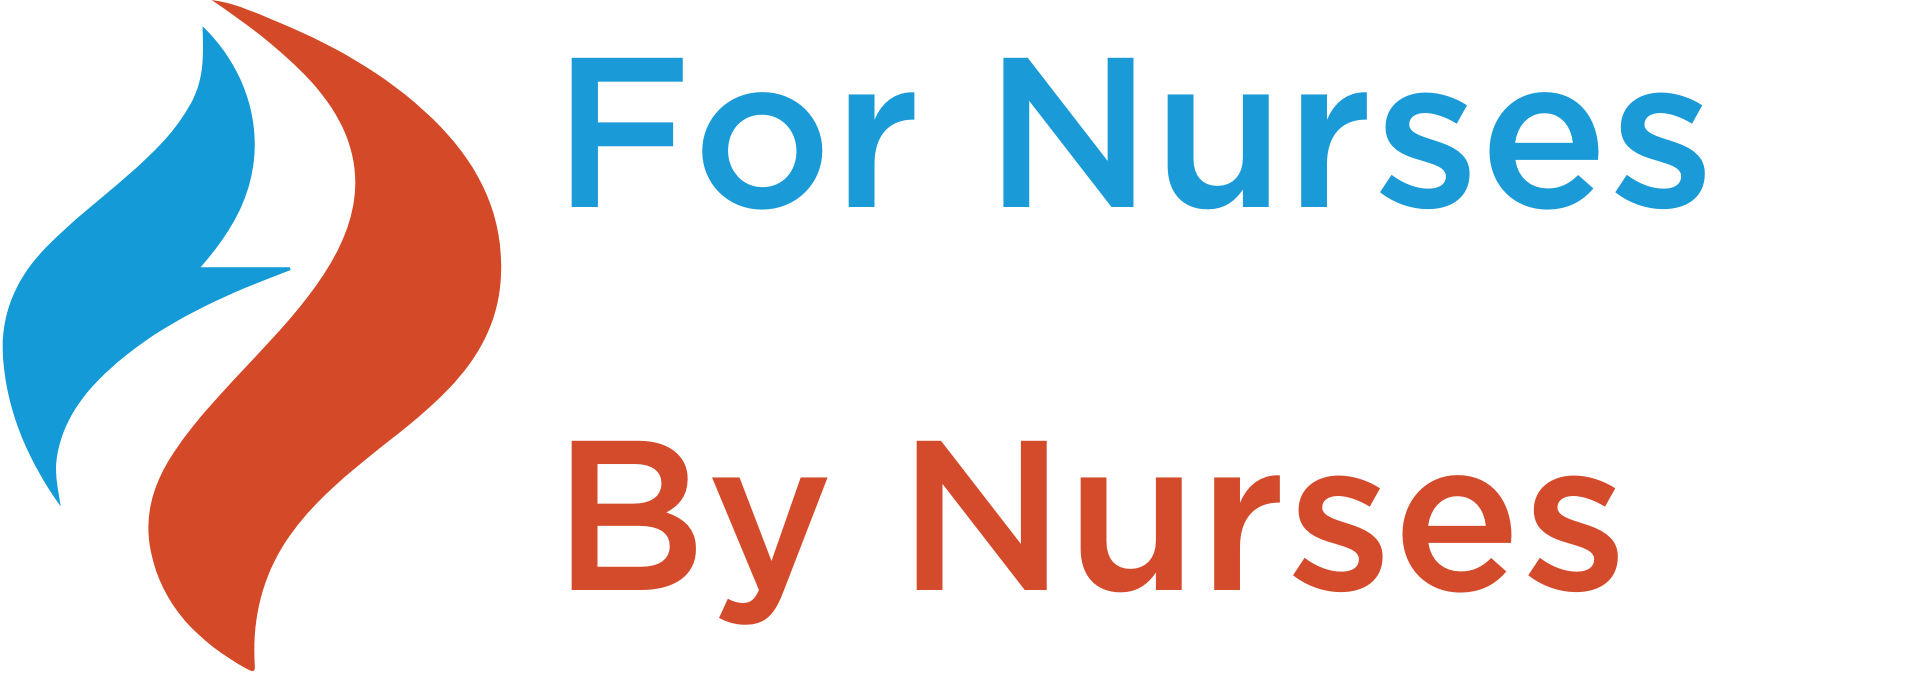 For Nurses By Nurses